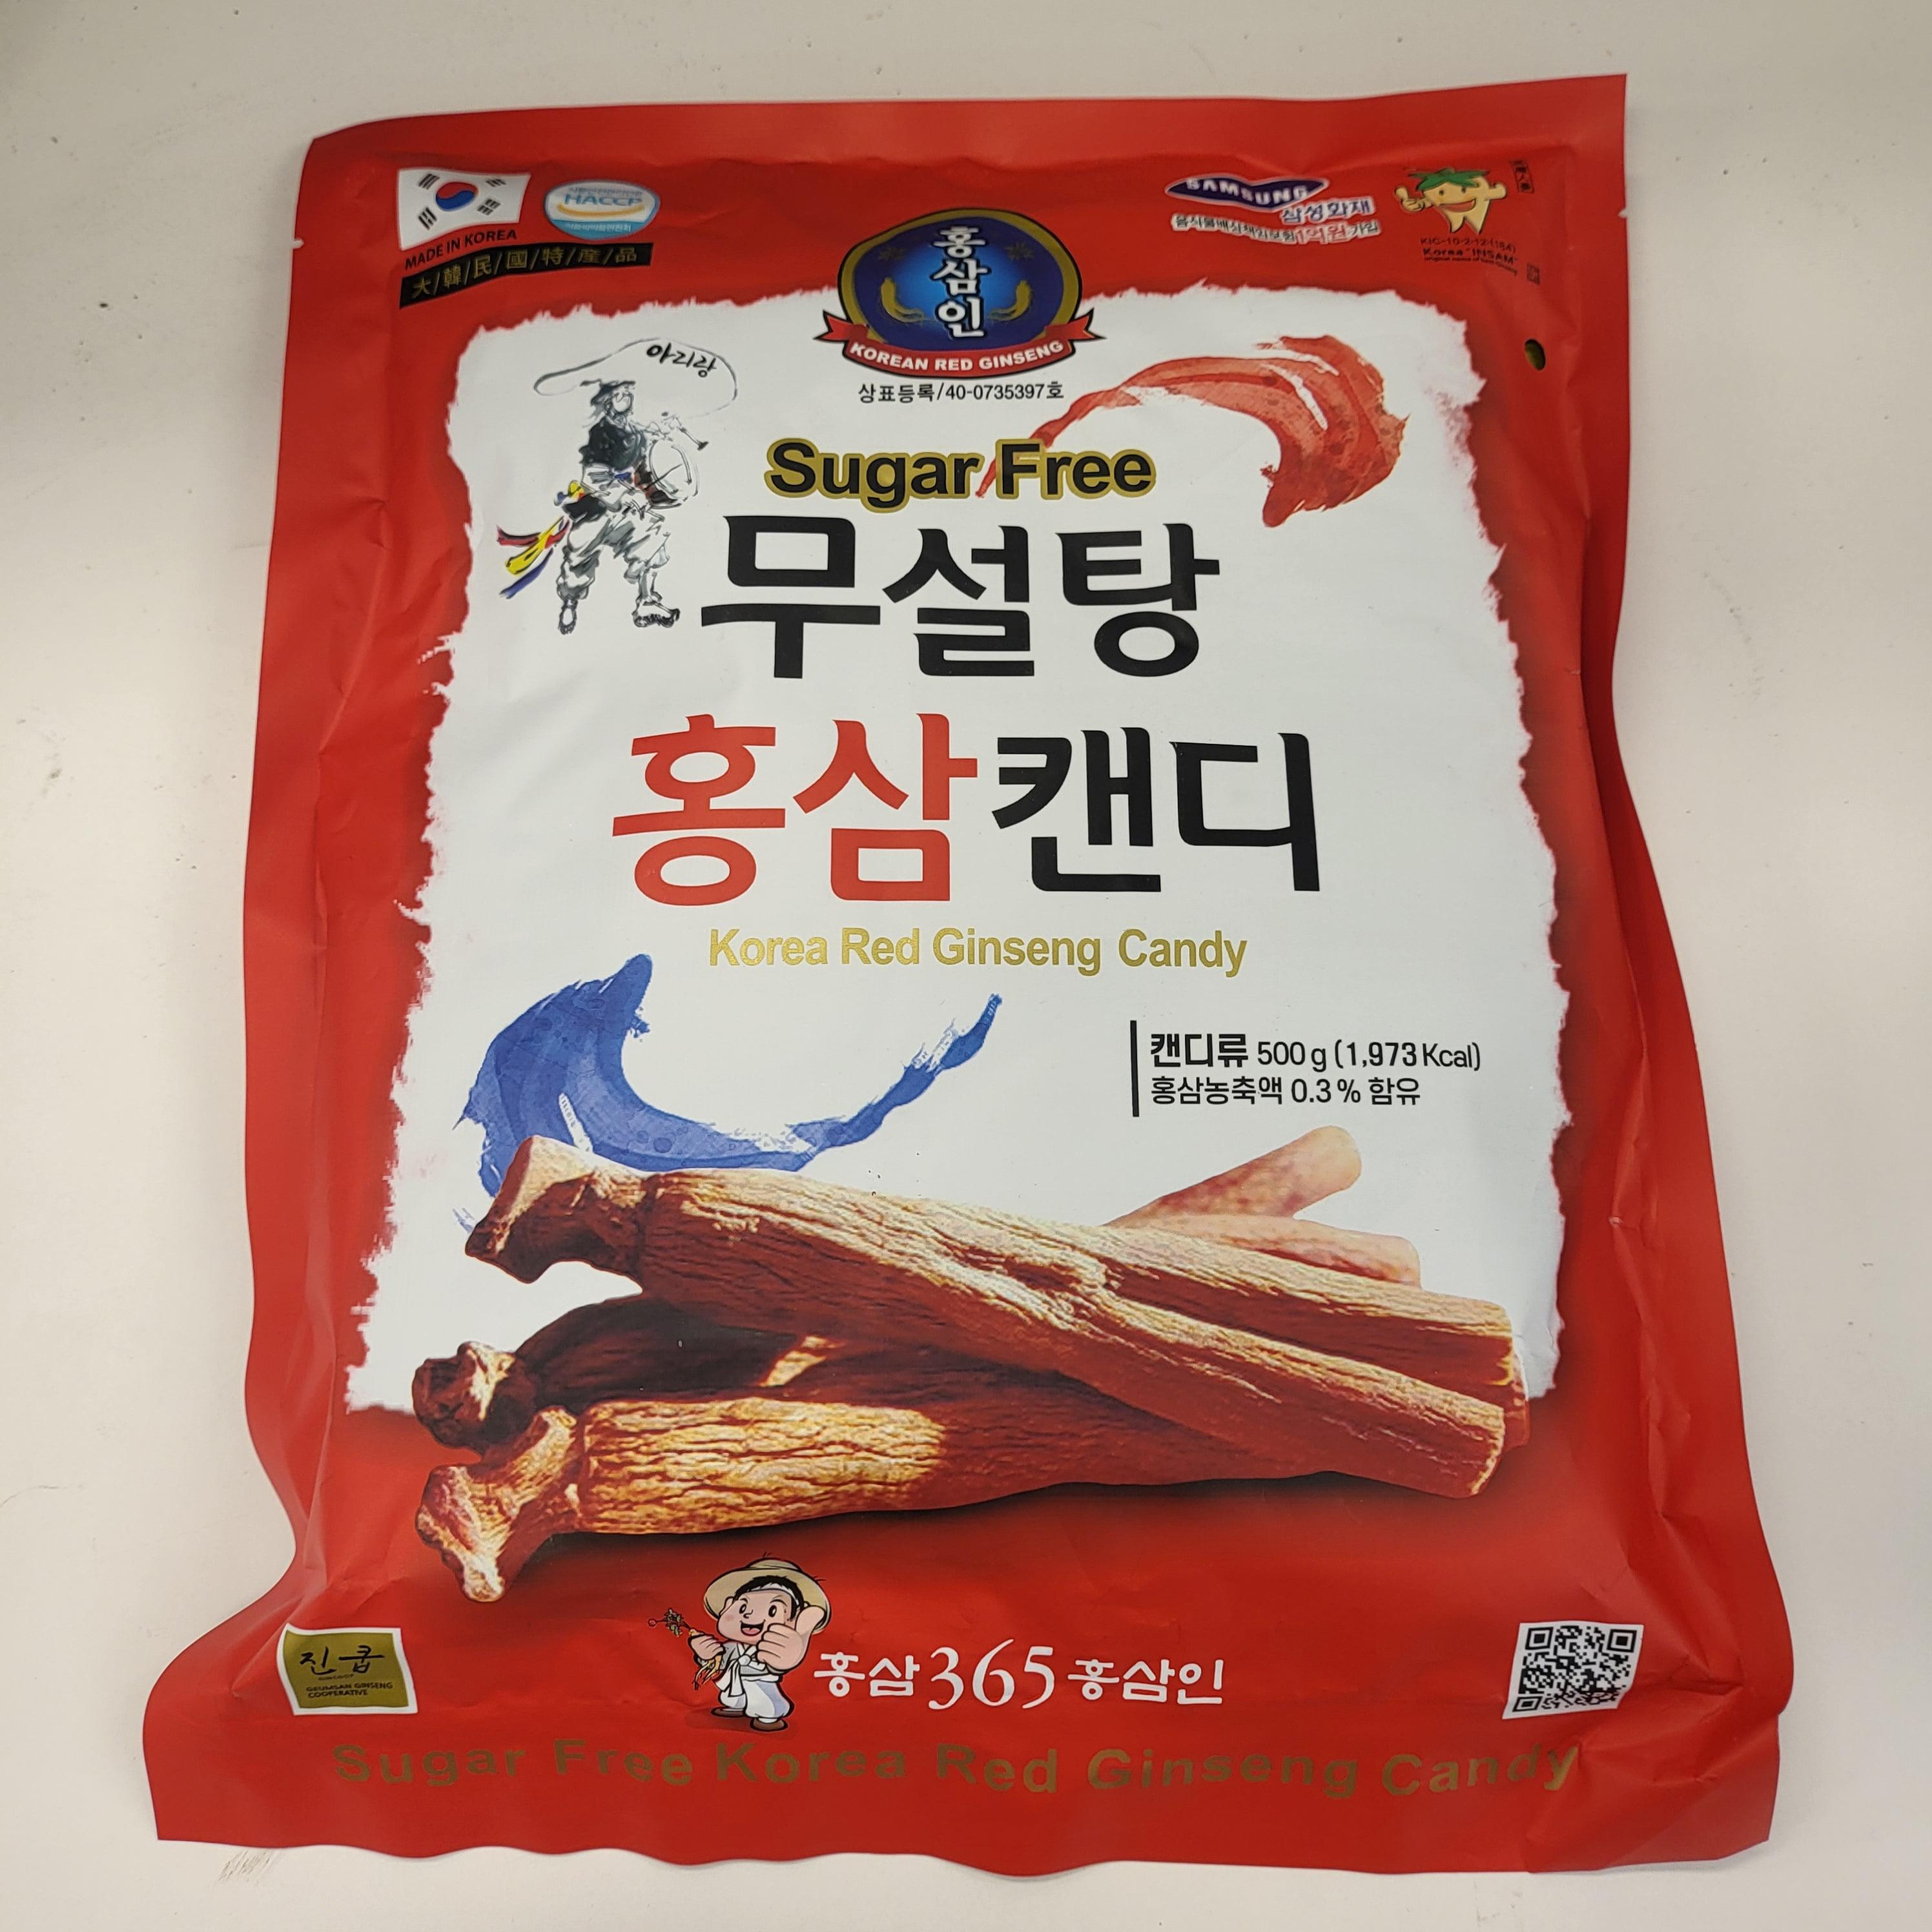 Nonghyeob Korean Premium Red Ginseng Candy Sugar Free 500g